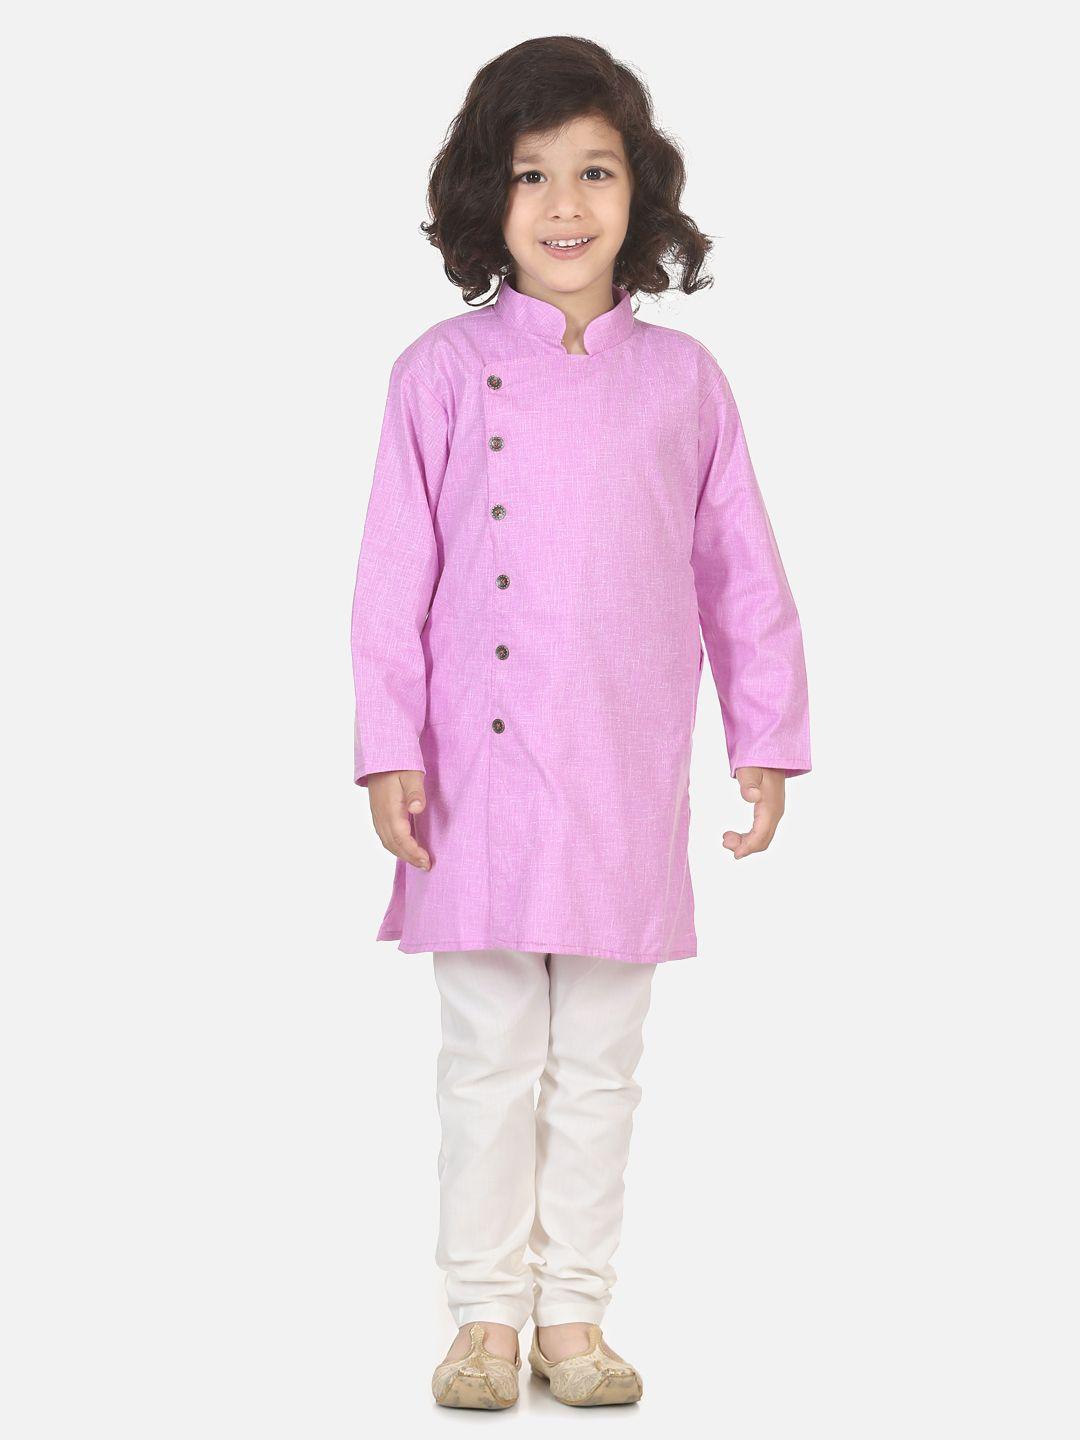 lilpicks boys lavender & cream-coloured solid kurta with pyjamas